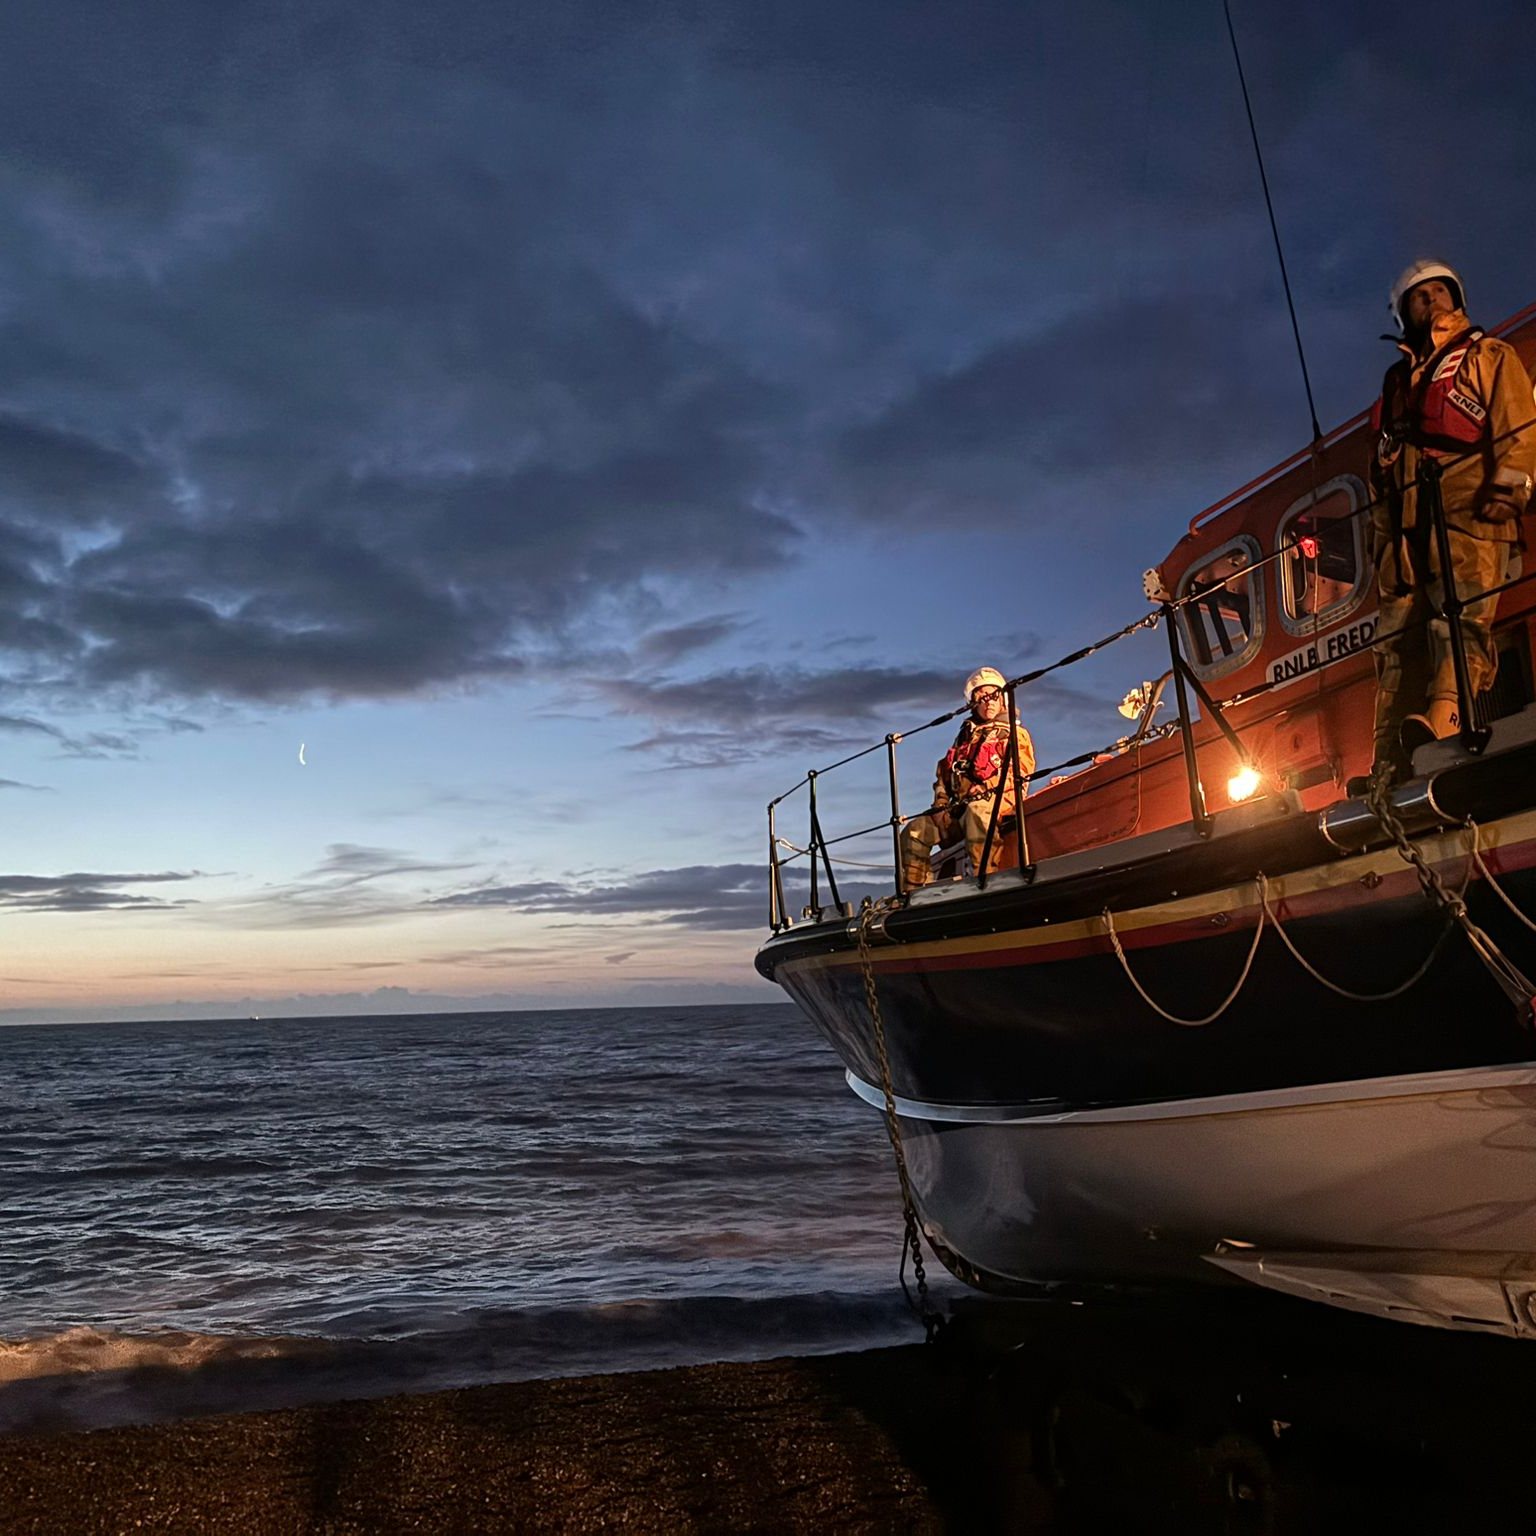 Aldeburgh Lifeboat Station | Saving Lives at Sea.